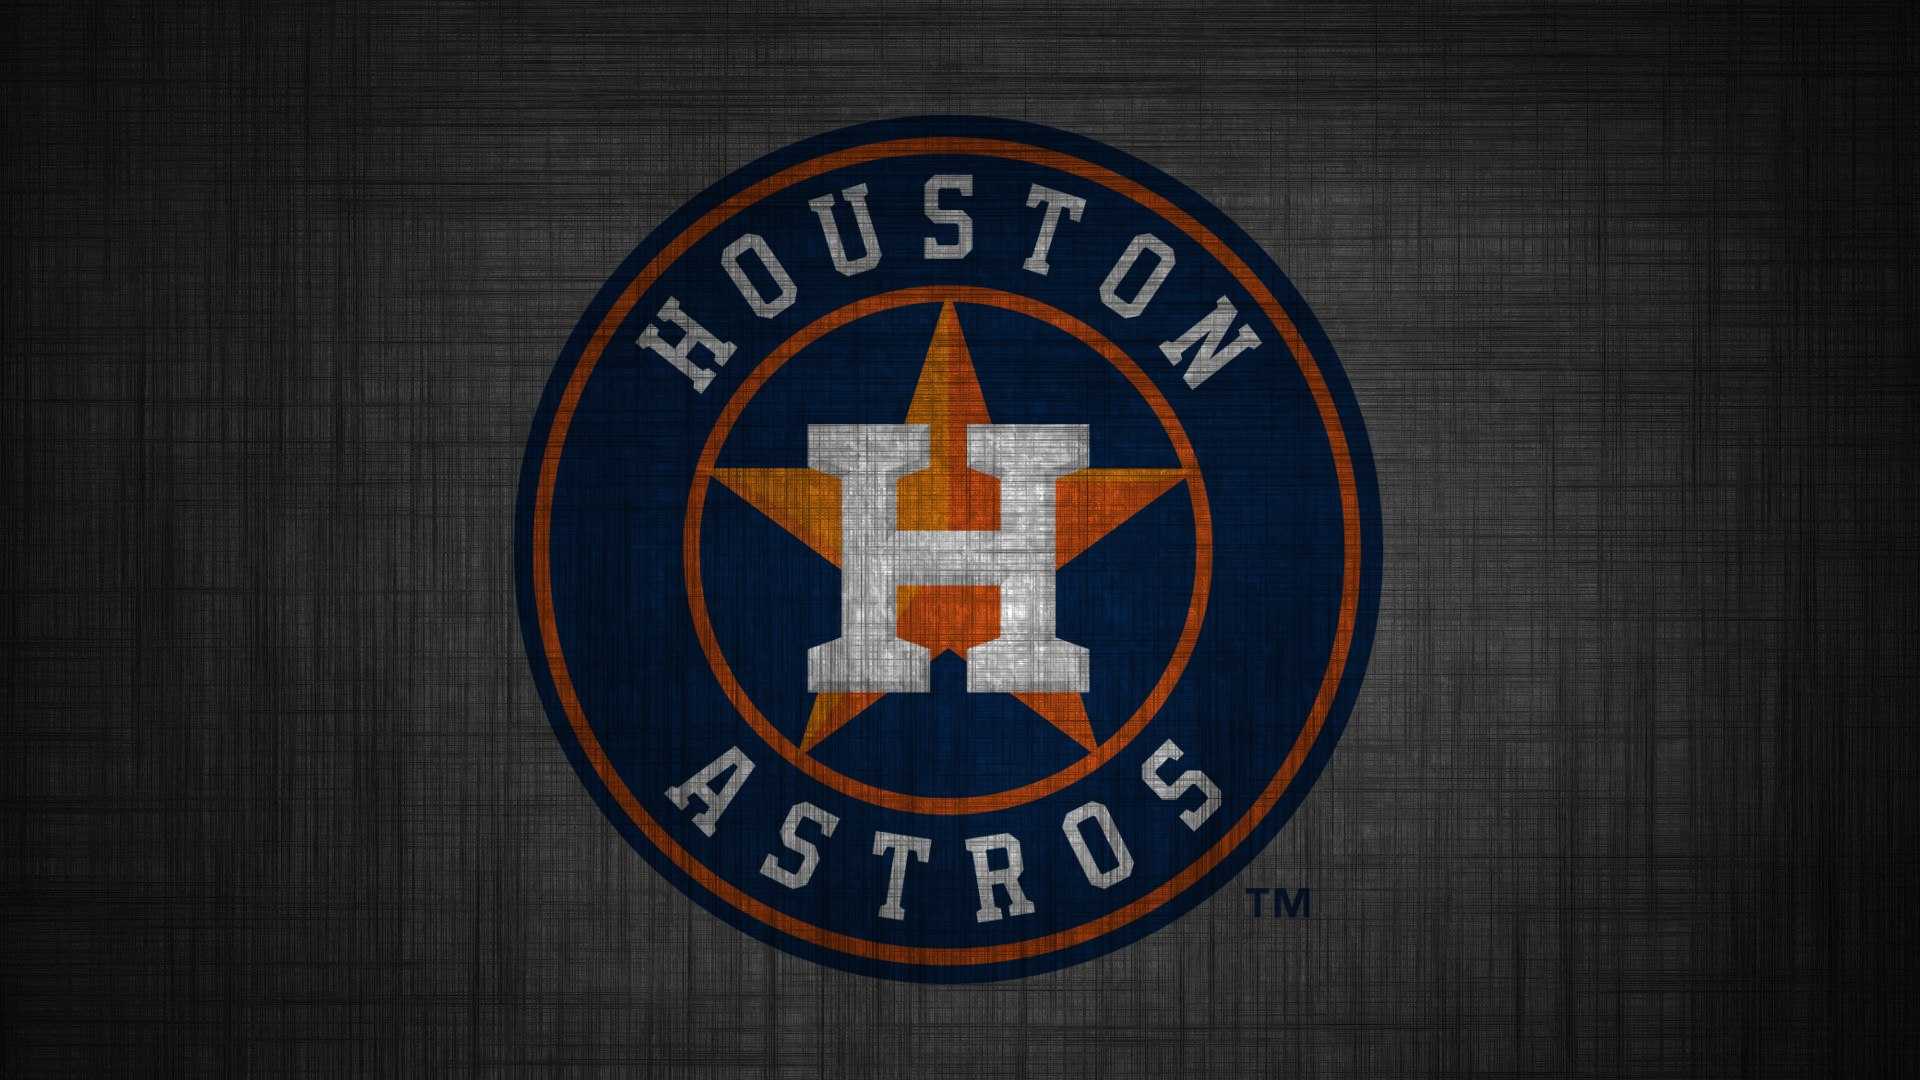 HD Houston Astros Wallpaper - iXpap